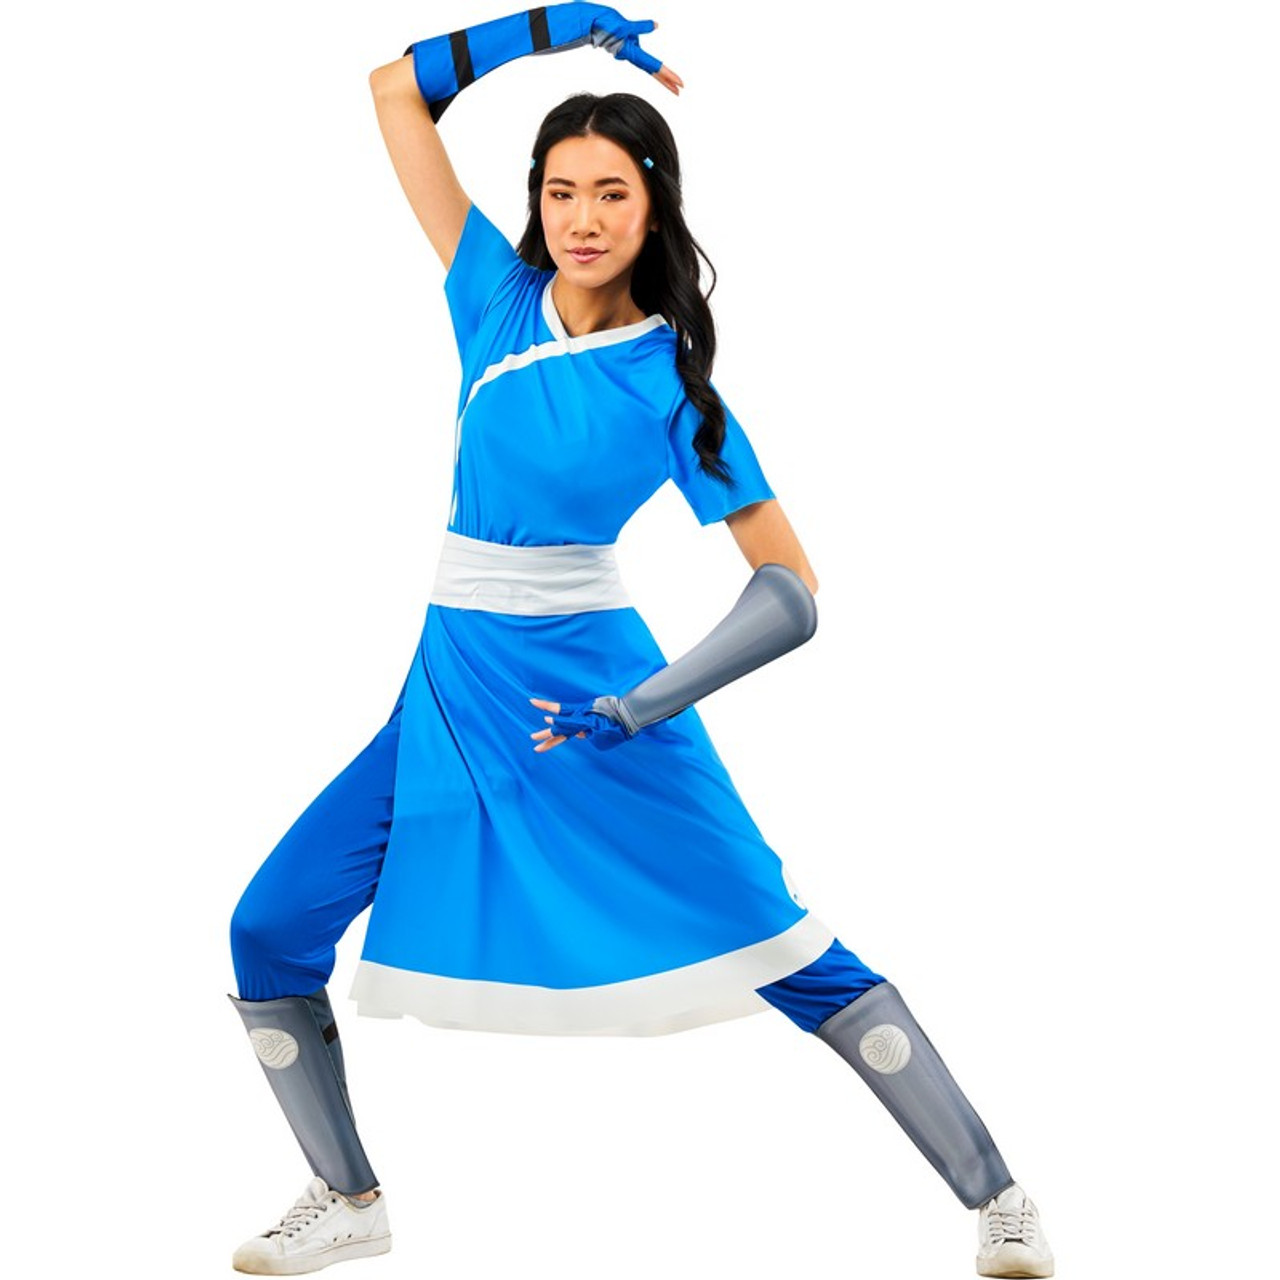 Avatar The Last Airbender Katara Women's Costume